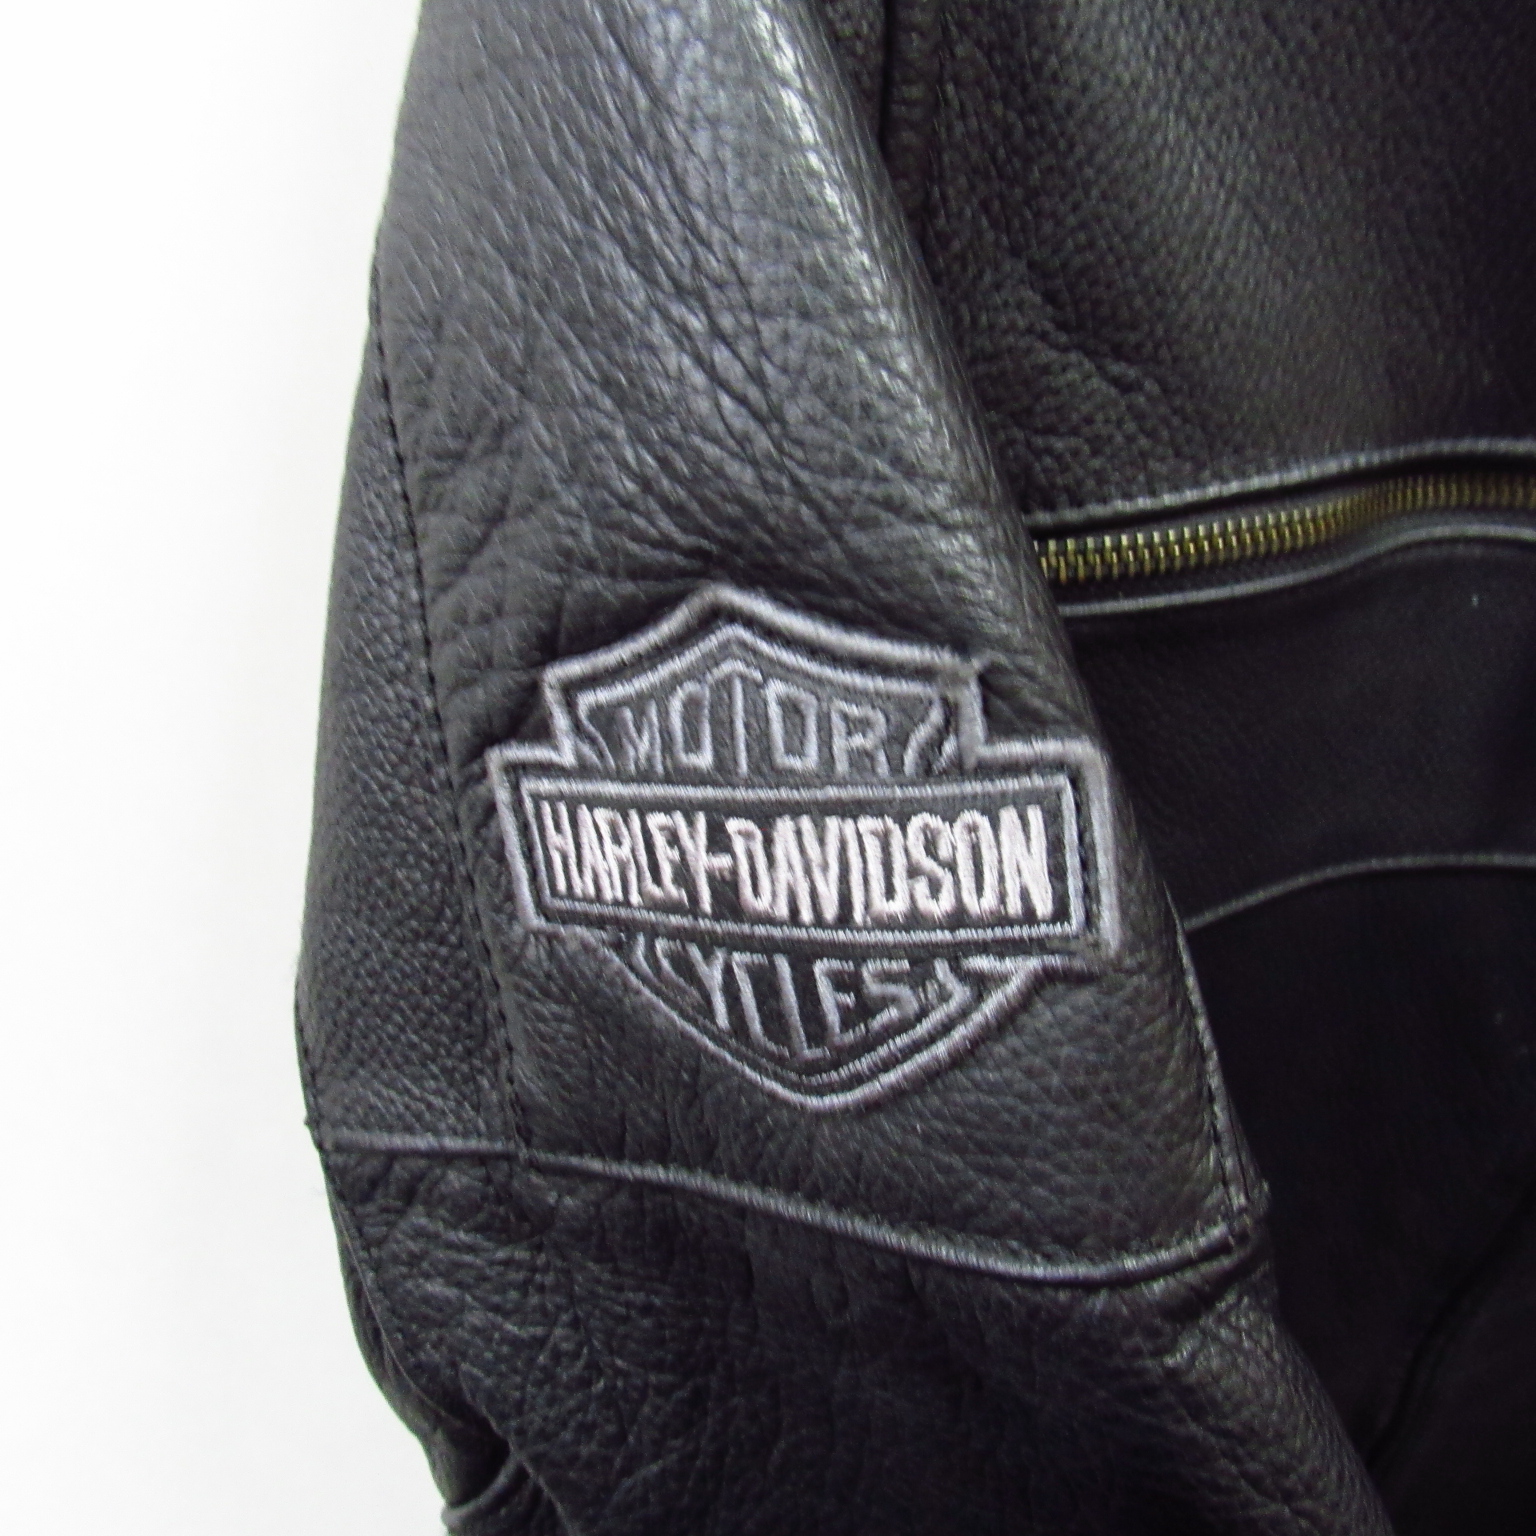 Harley-Davidson 98045-19VM Swingarm 3-in-1 Leather Jacket